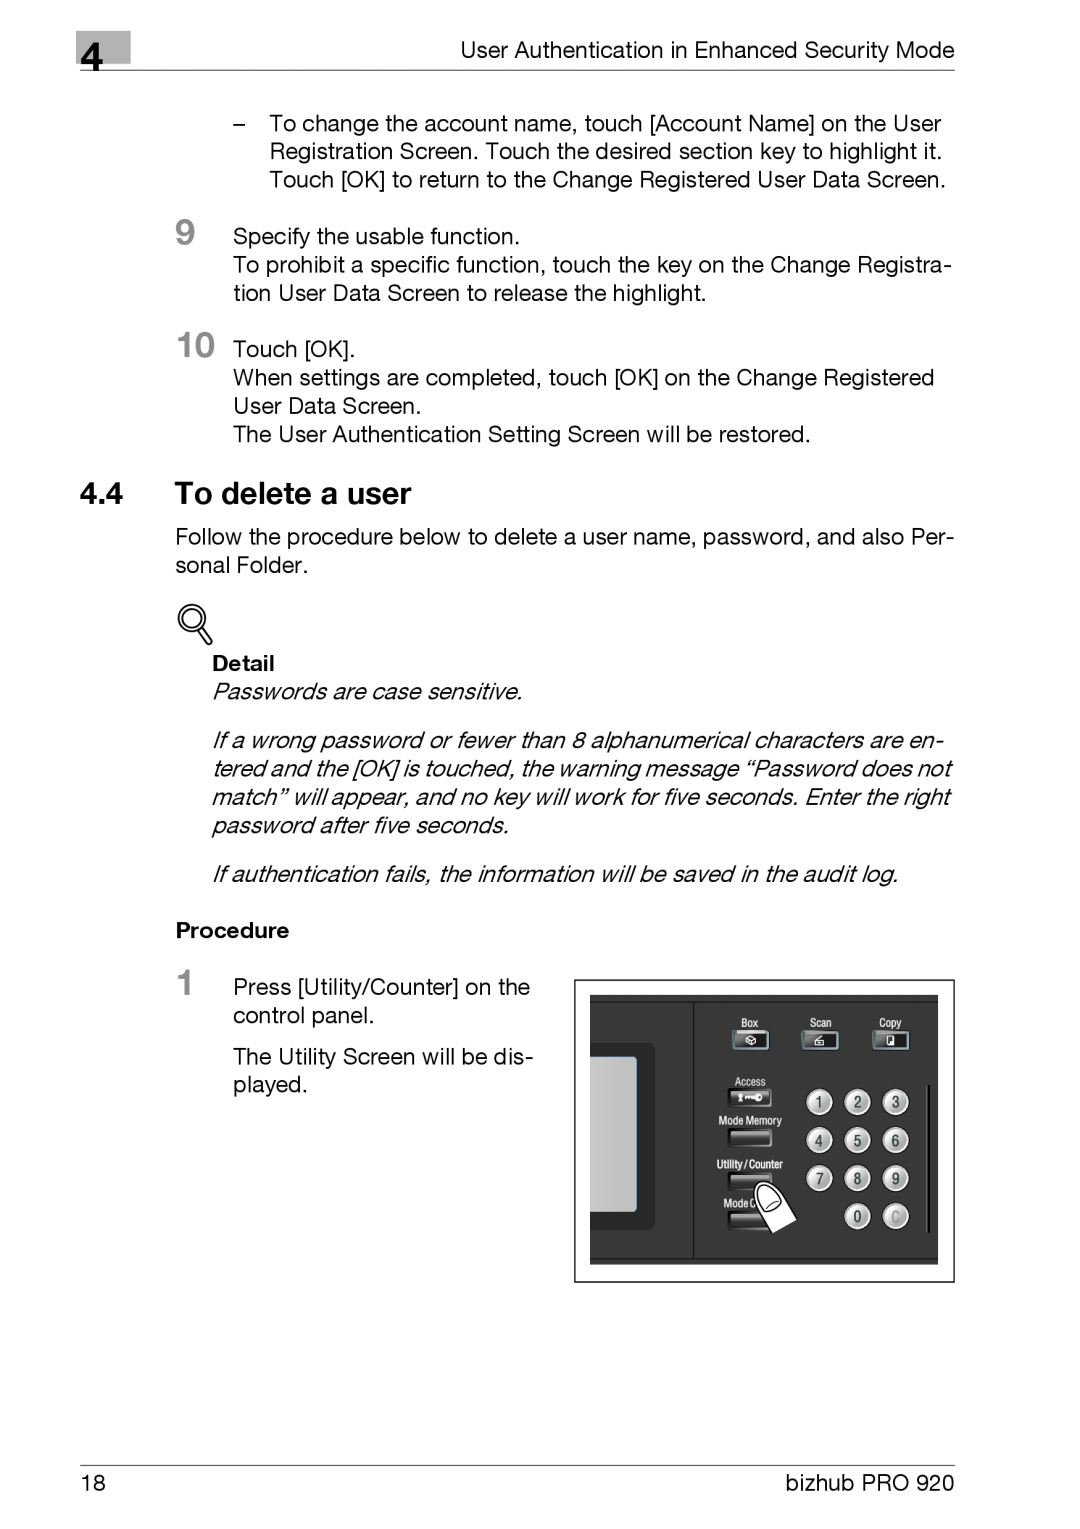 Konica Minolta 920 manual To delete a user, Detail, Procedure 